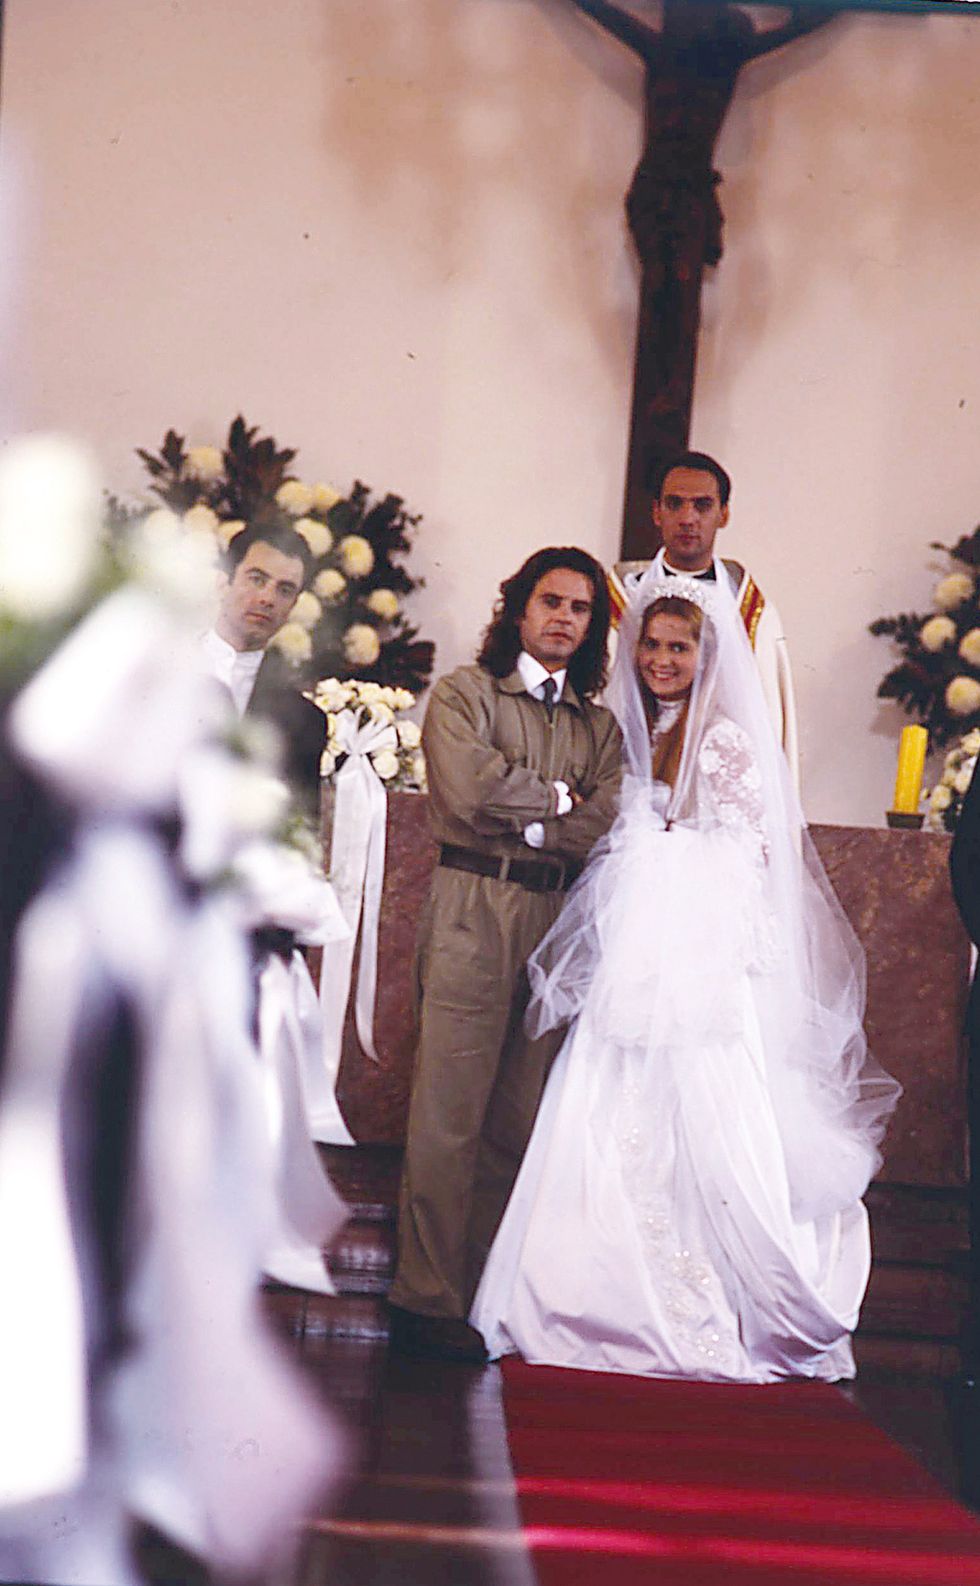 Photograph, Bride, Wedding dress, Ceremony, Marriage, Event, Wedding, Bridal clothing, Tradition, Dress, 